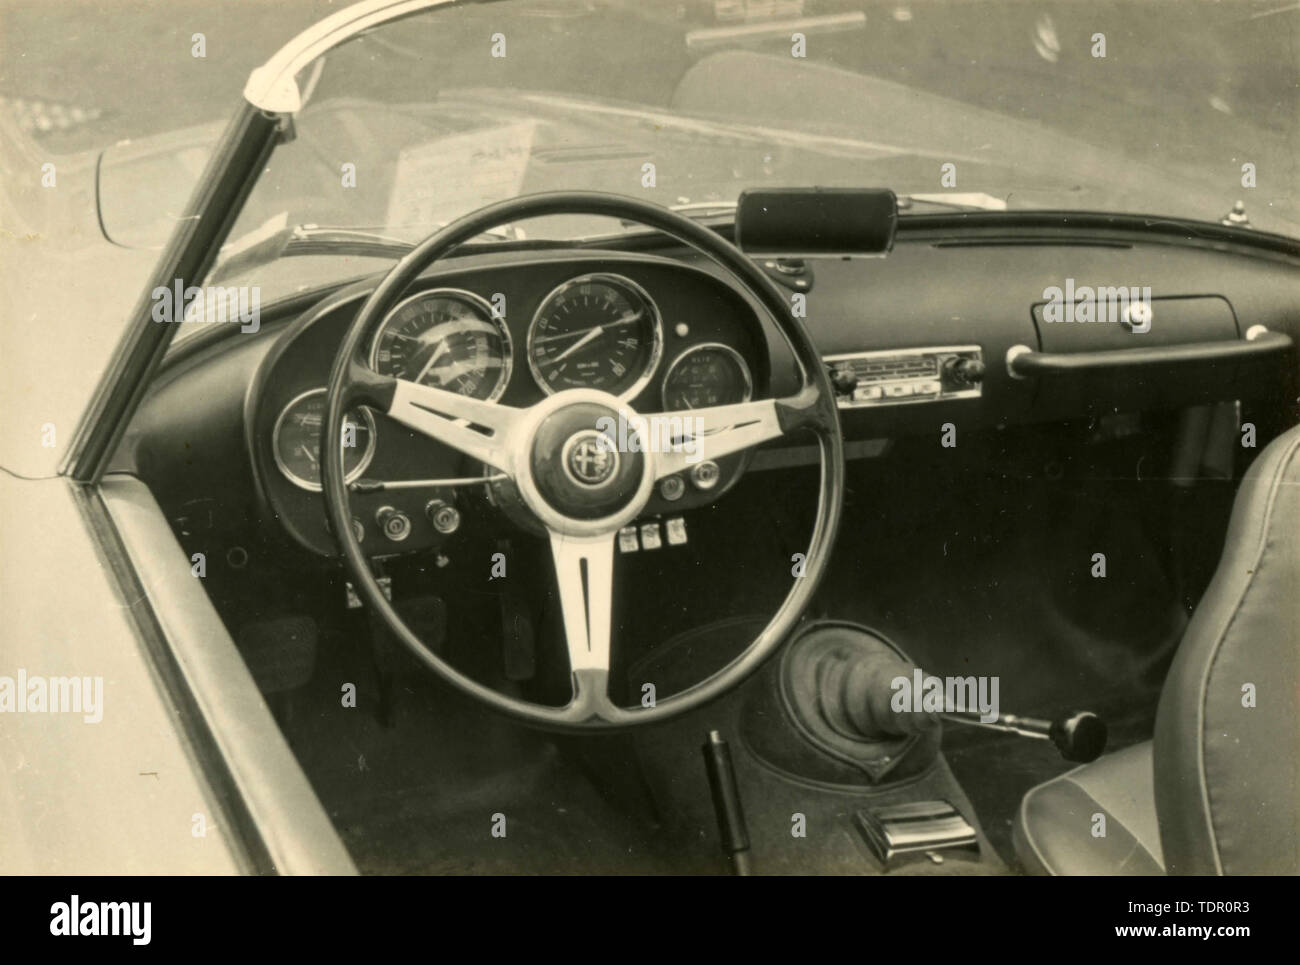 Dashboard of Alfa Romeo Giulietta Stock Photo - Alamy